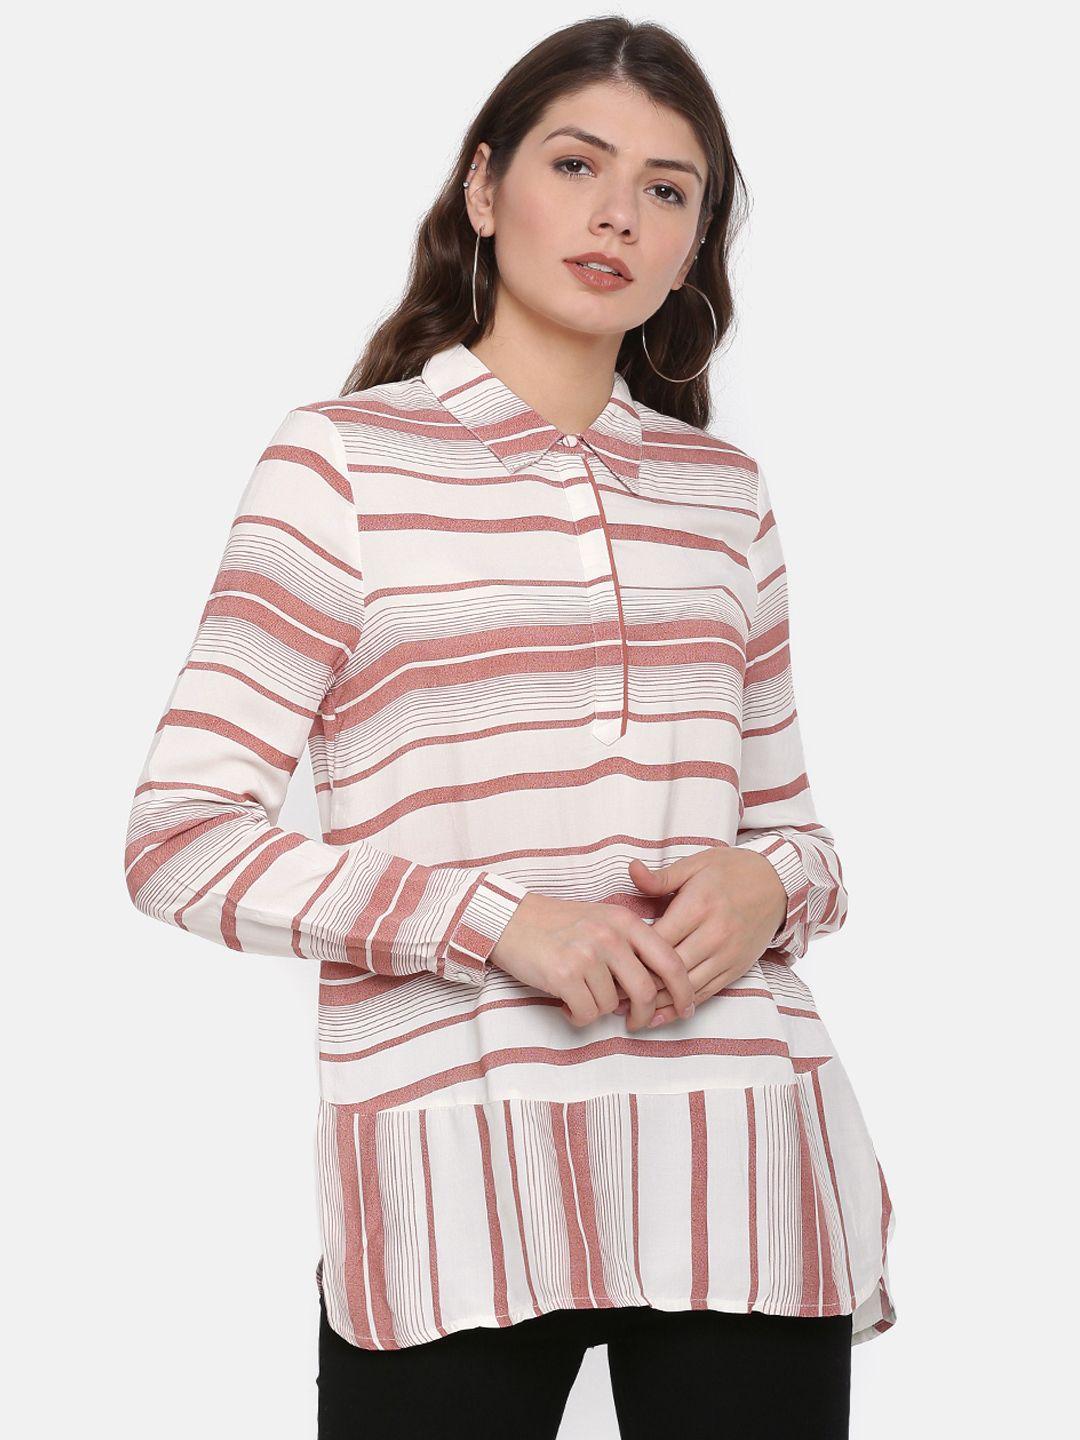 vero moda women off-white & red regular fit striped casual shirt